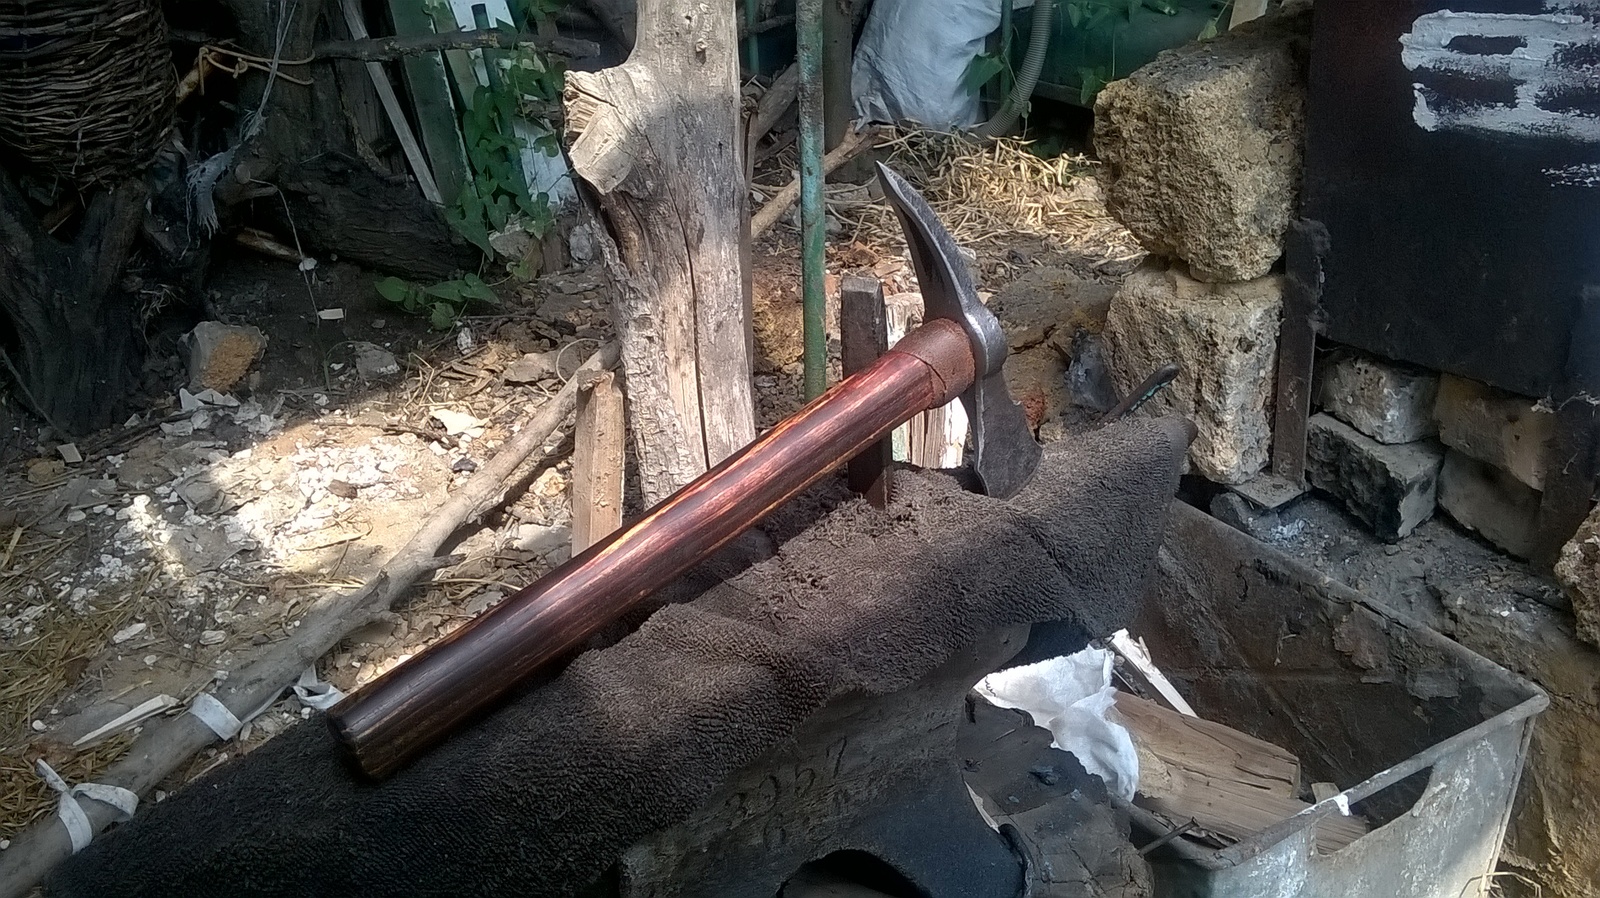 Reforged hammer, tamahawk. - My, Hammer, Axe, Tomahawk, Hardening, Tree, Stain, Drying oil, Longpost